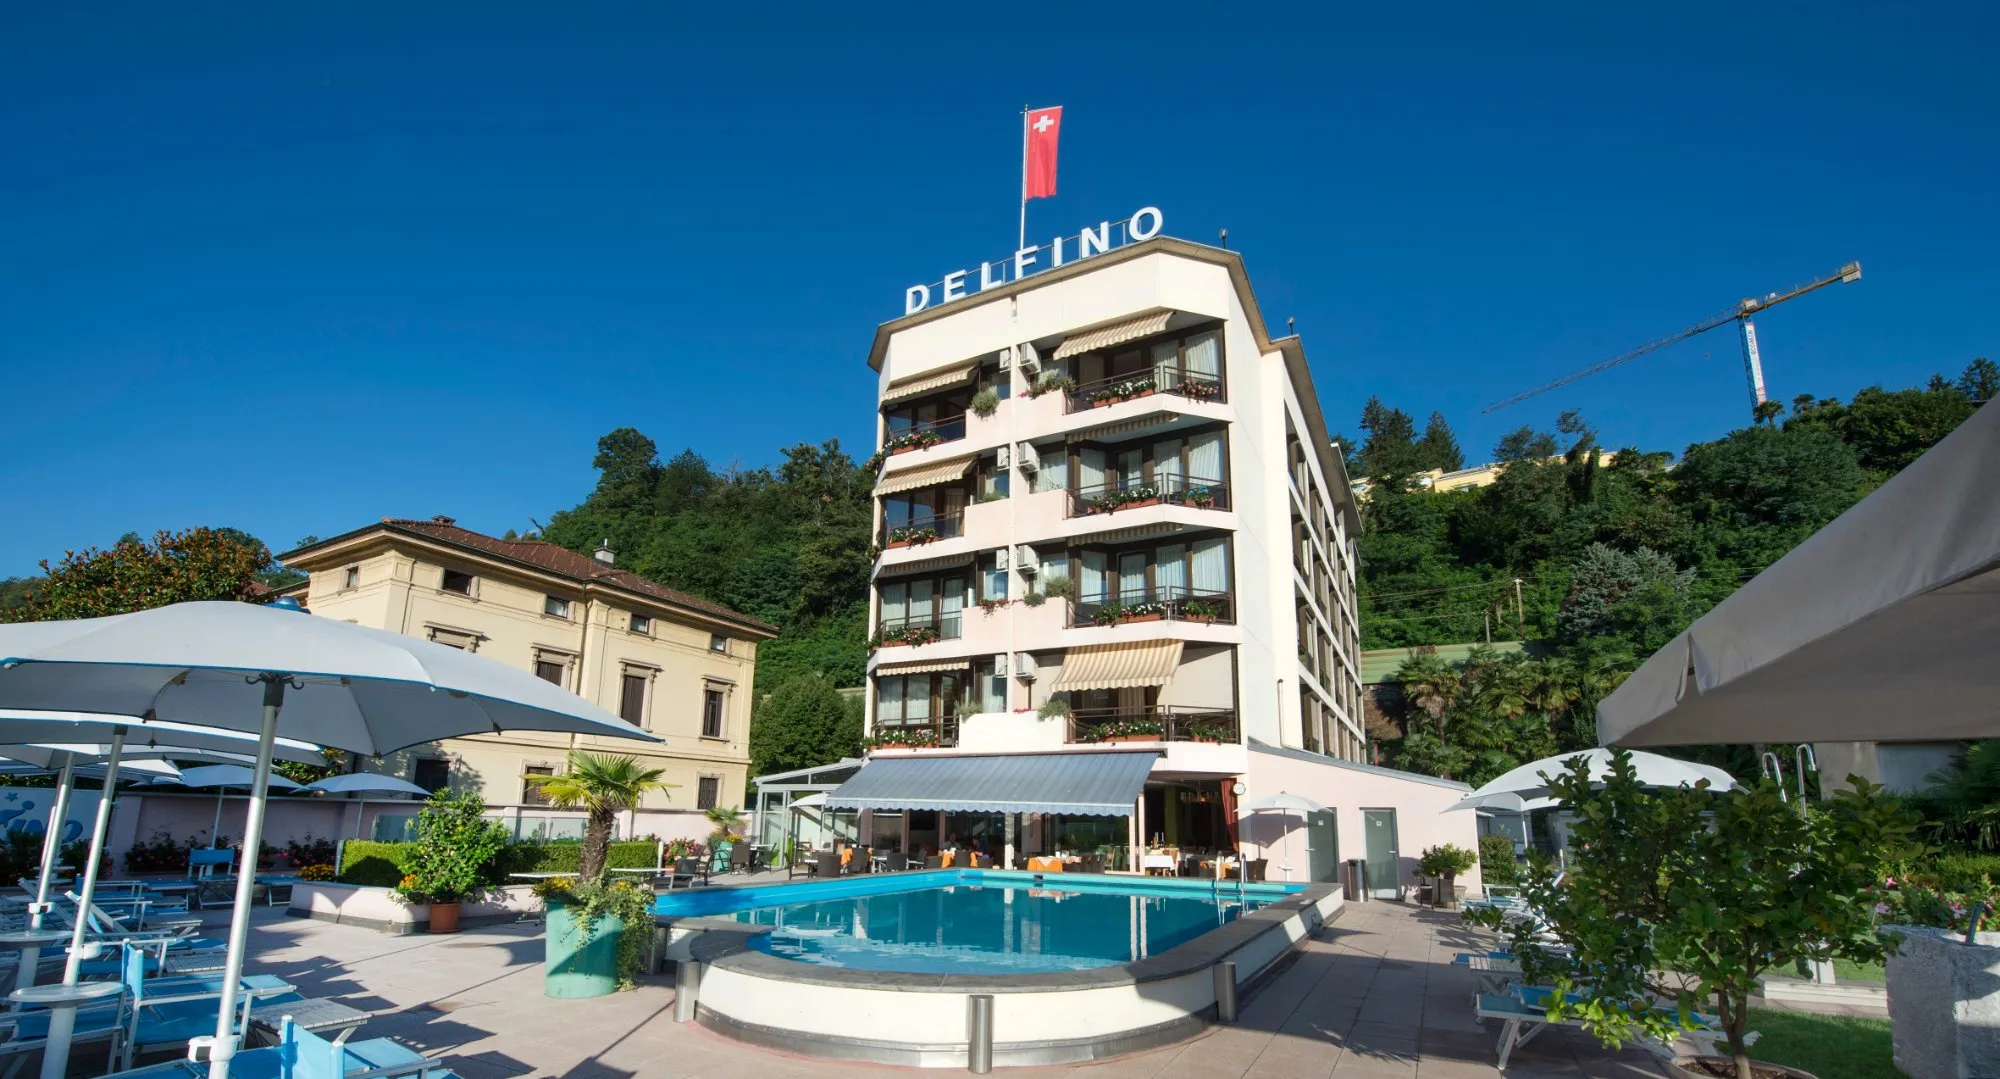 Building hotel Hotel Delfino Lugano